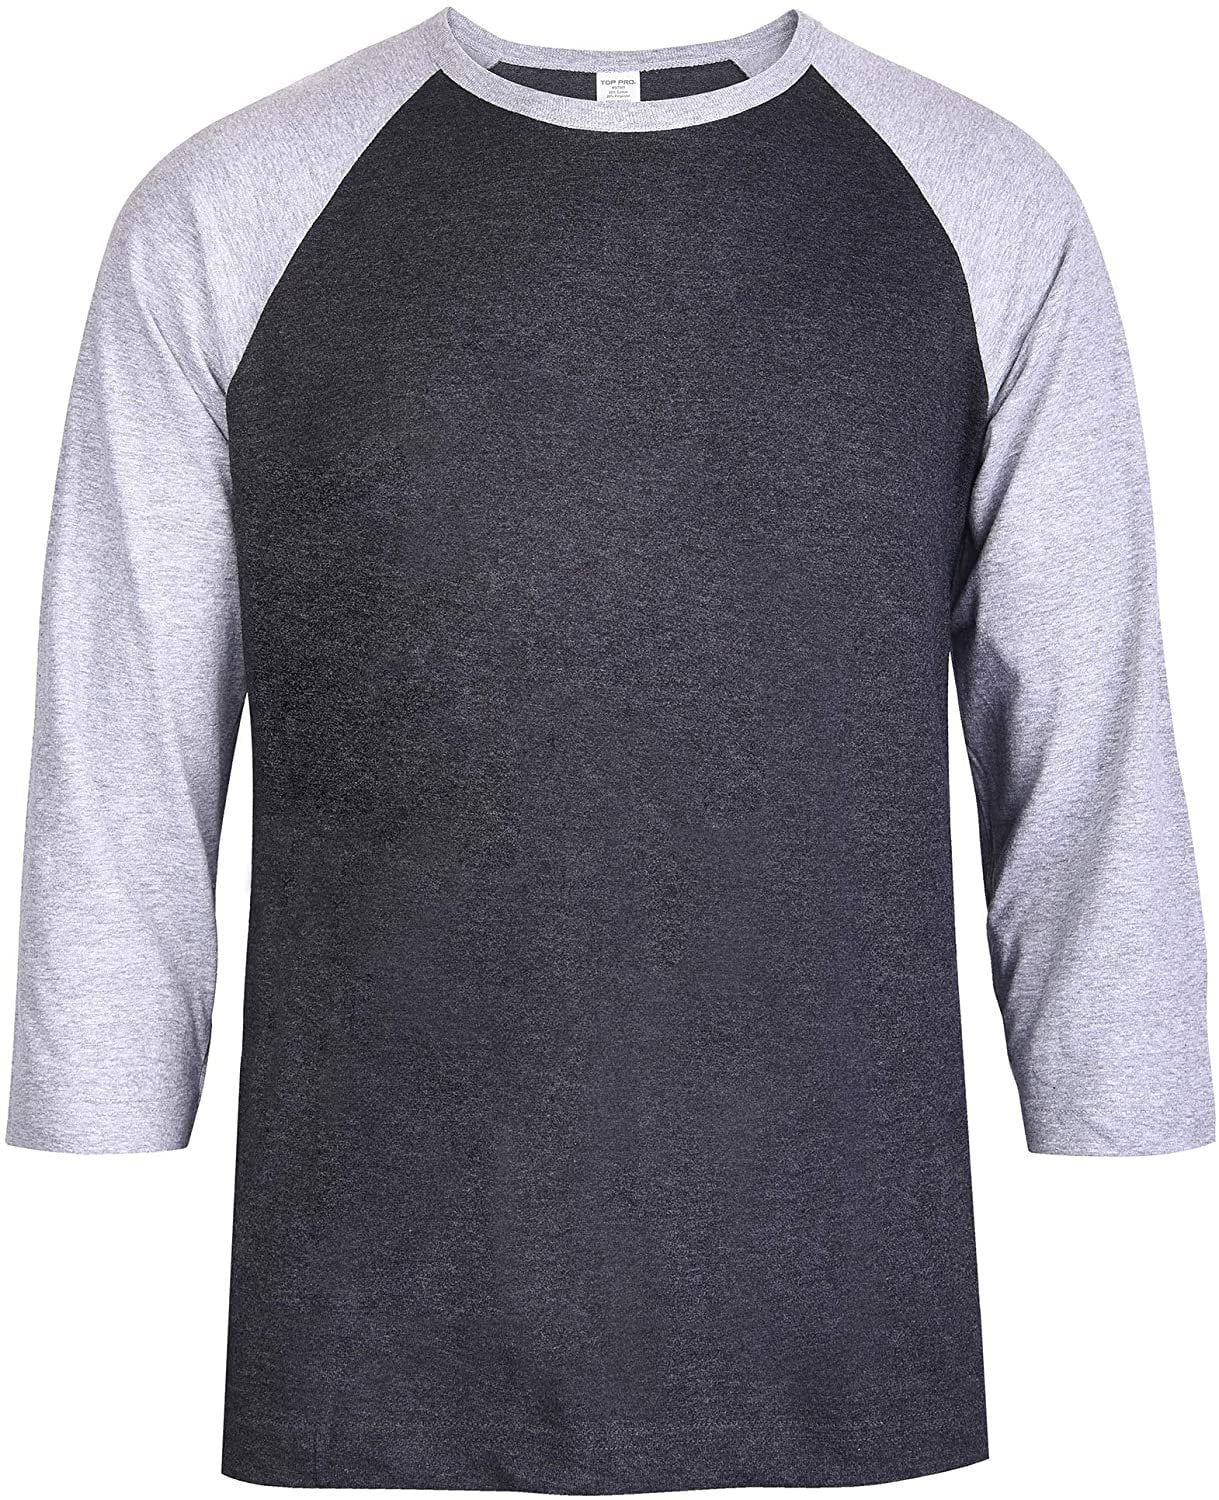 DailyWear Mens Casual 3/4 Sleeve Plain Baseball Cotton T Shirts (H.Gry ...